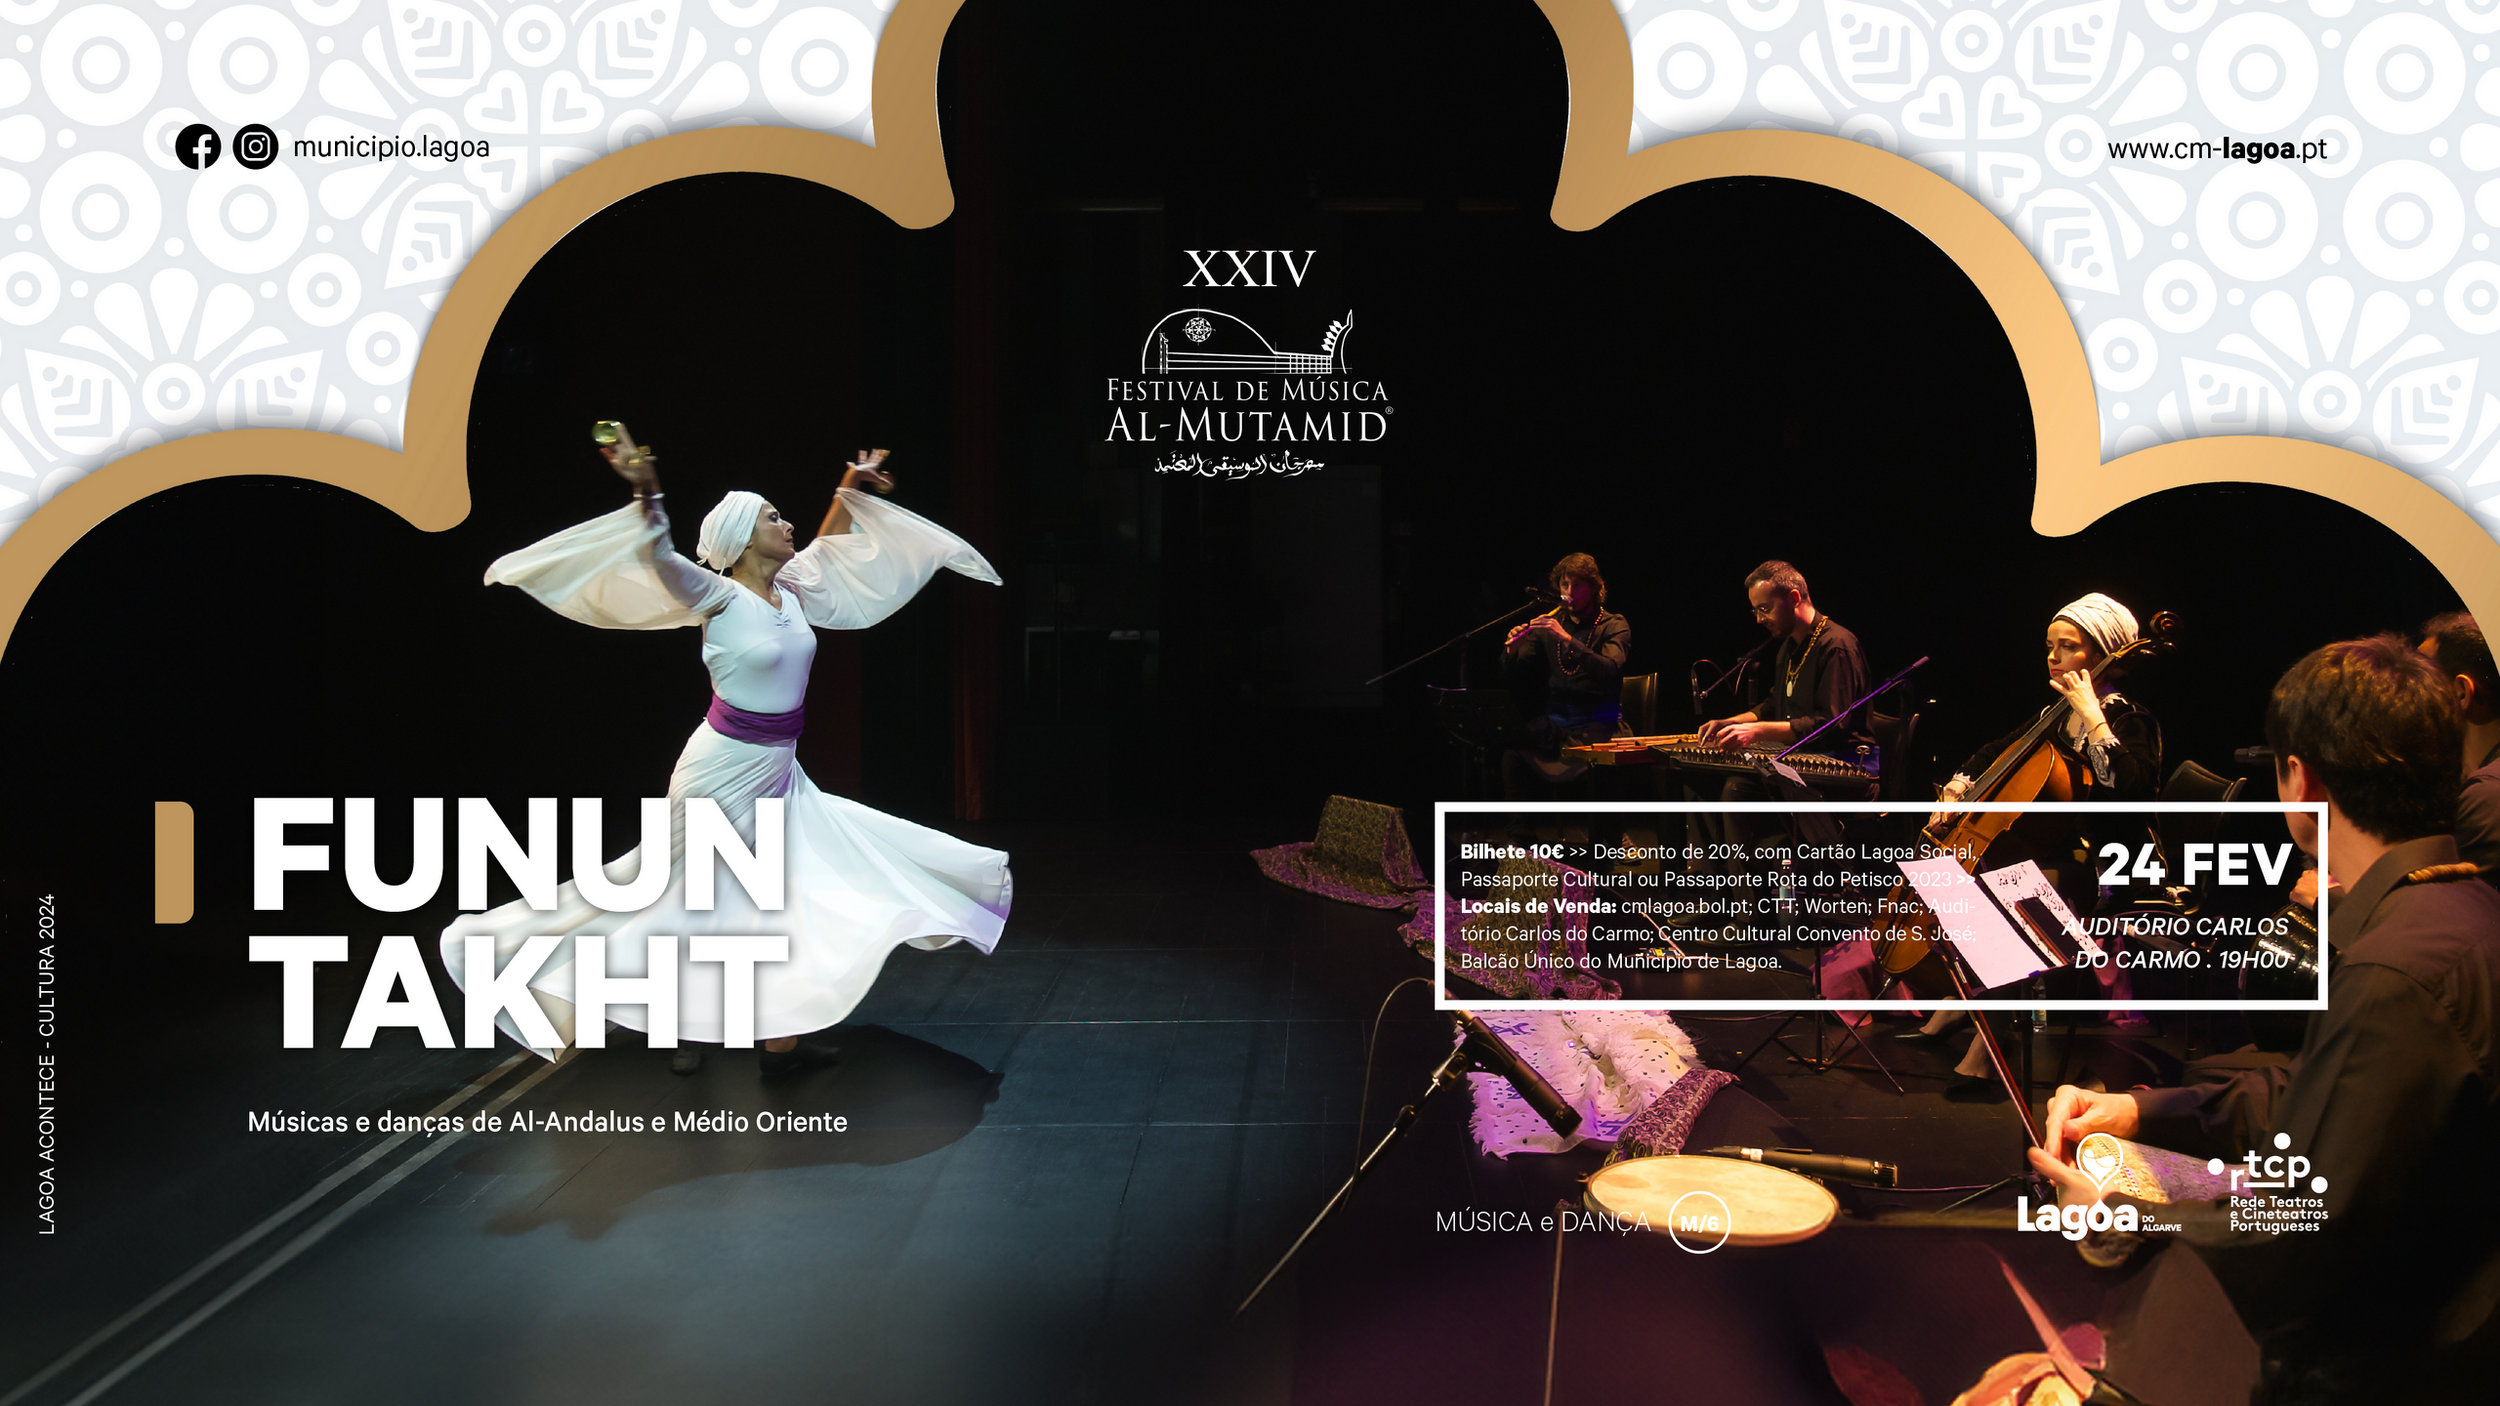 XXIV Festival de Música Al-Mutamid | "Funun Takht"